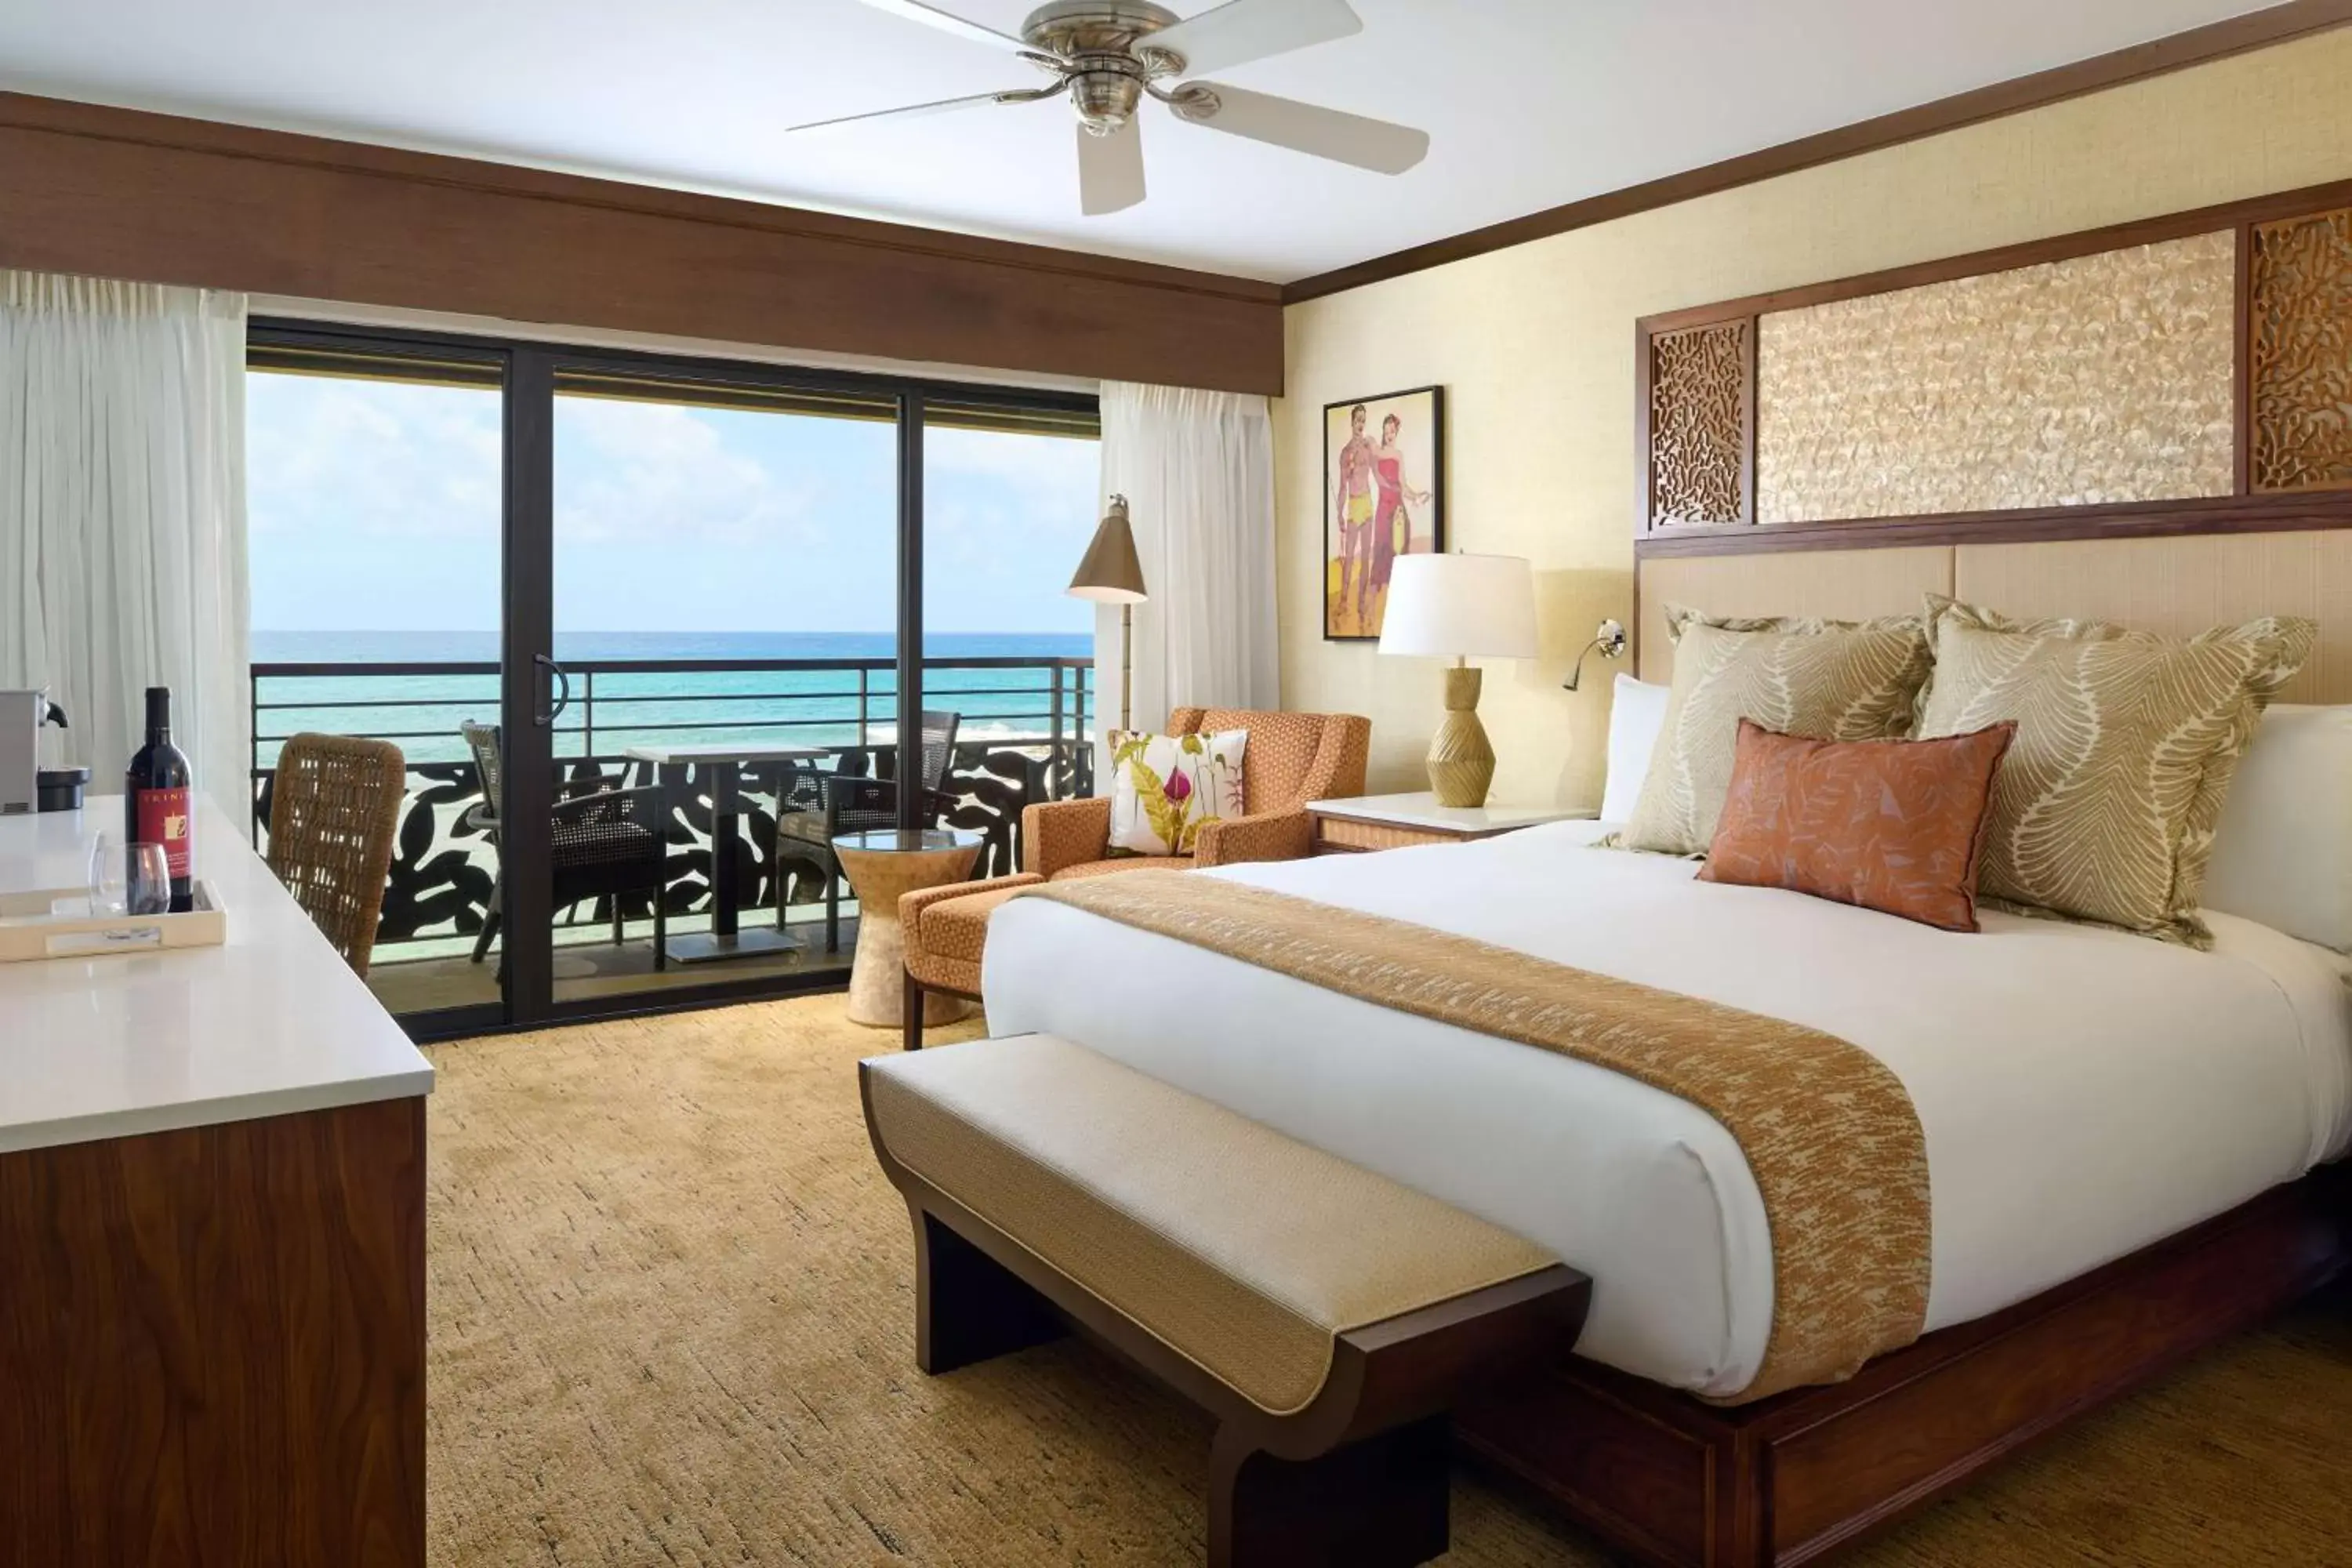 Bedroom in Koa Kea Resort on Poipu Beach